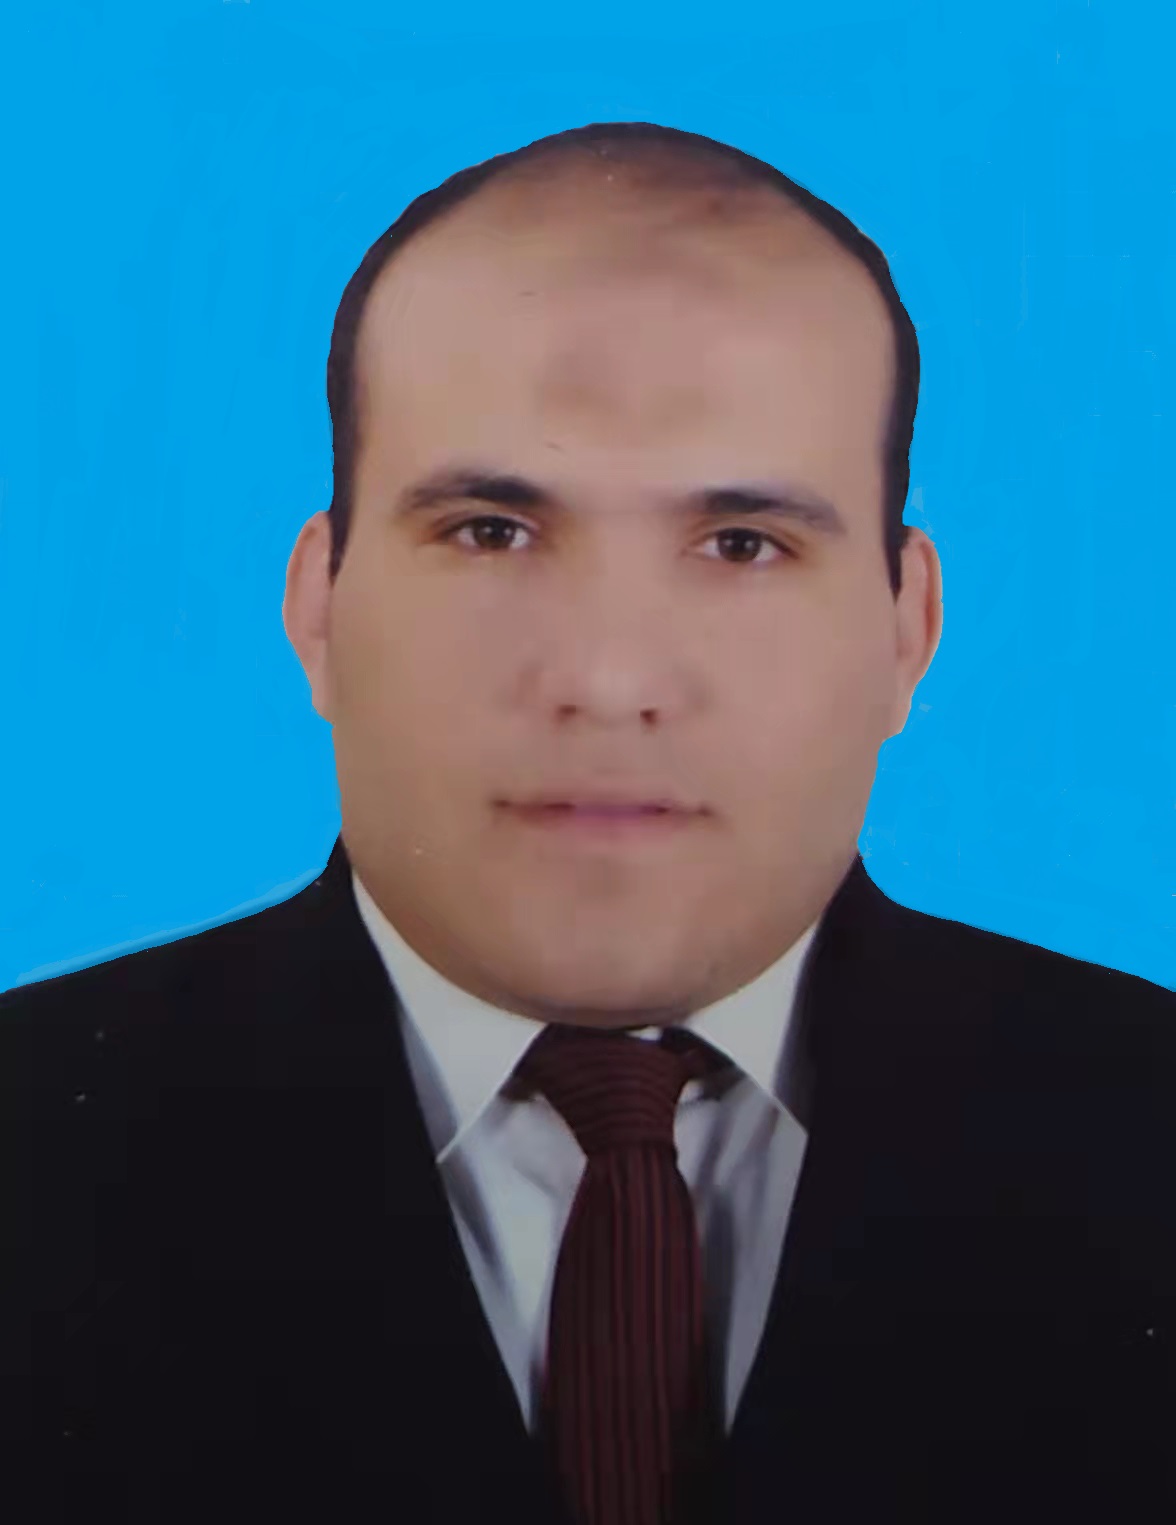 Mohamed Shehata Saleh Khalil